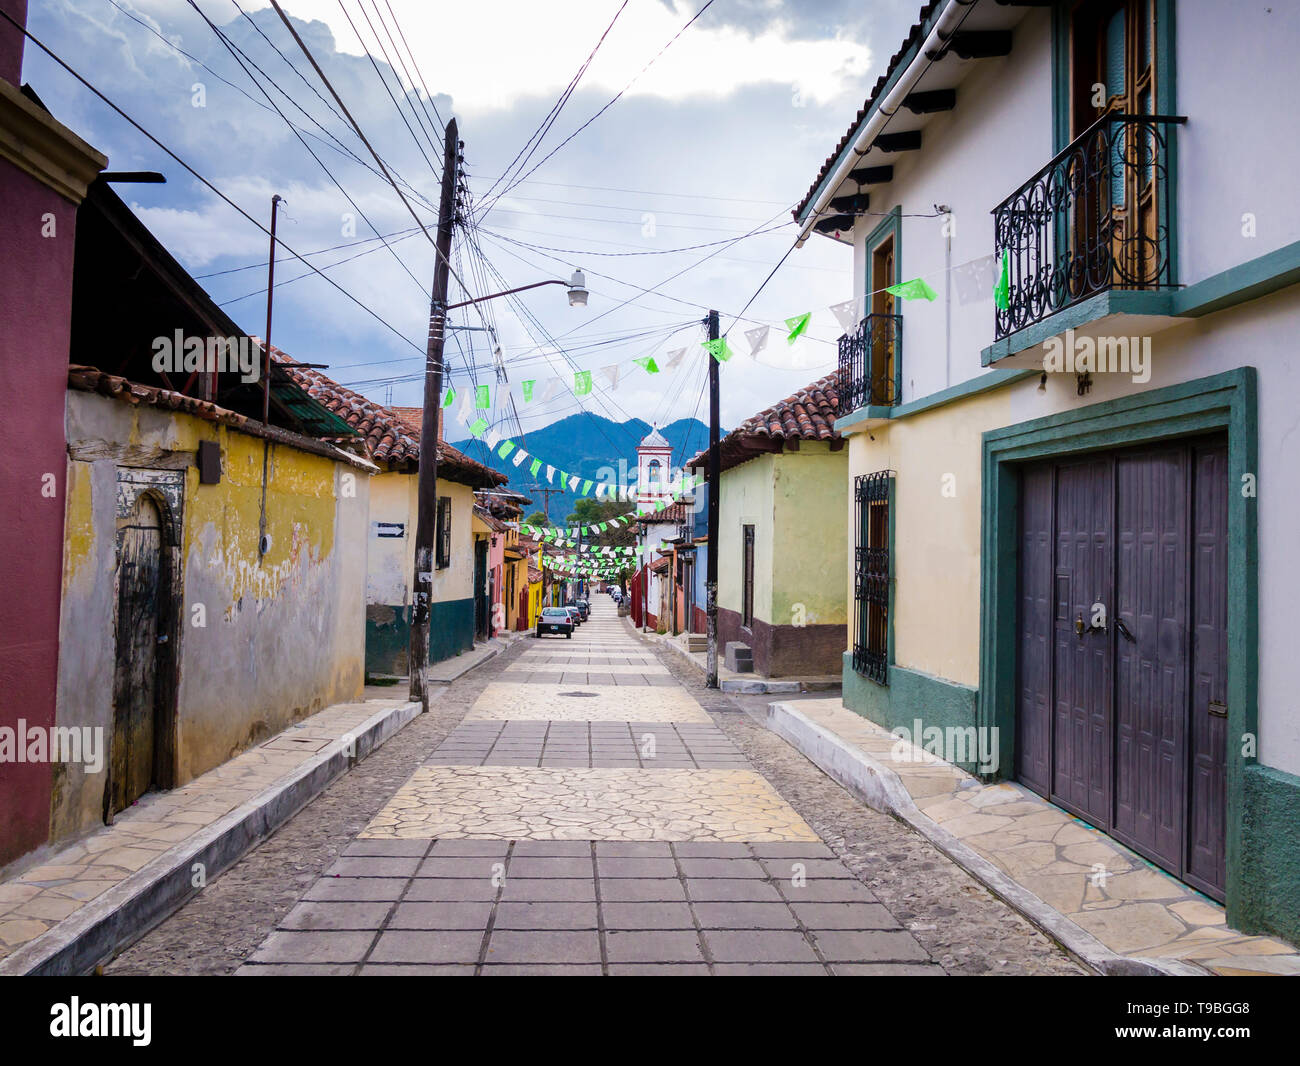 Tipica strada coloniale con case colorate in San Cristobal de las Casas, Chiapas, Messico Foto Stock